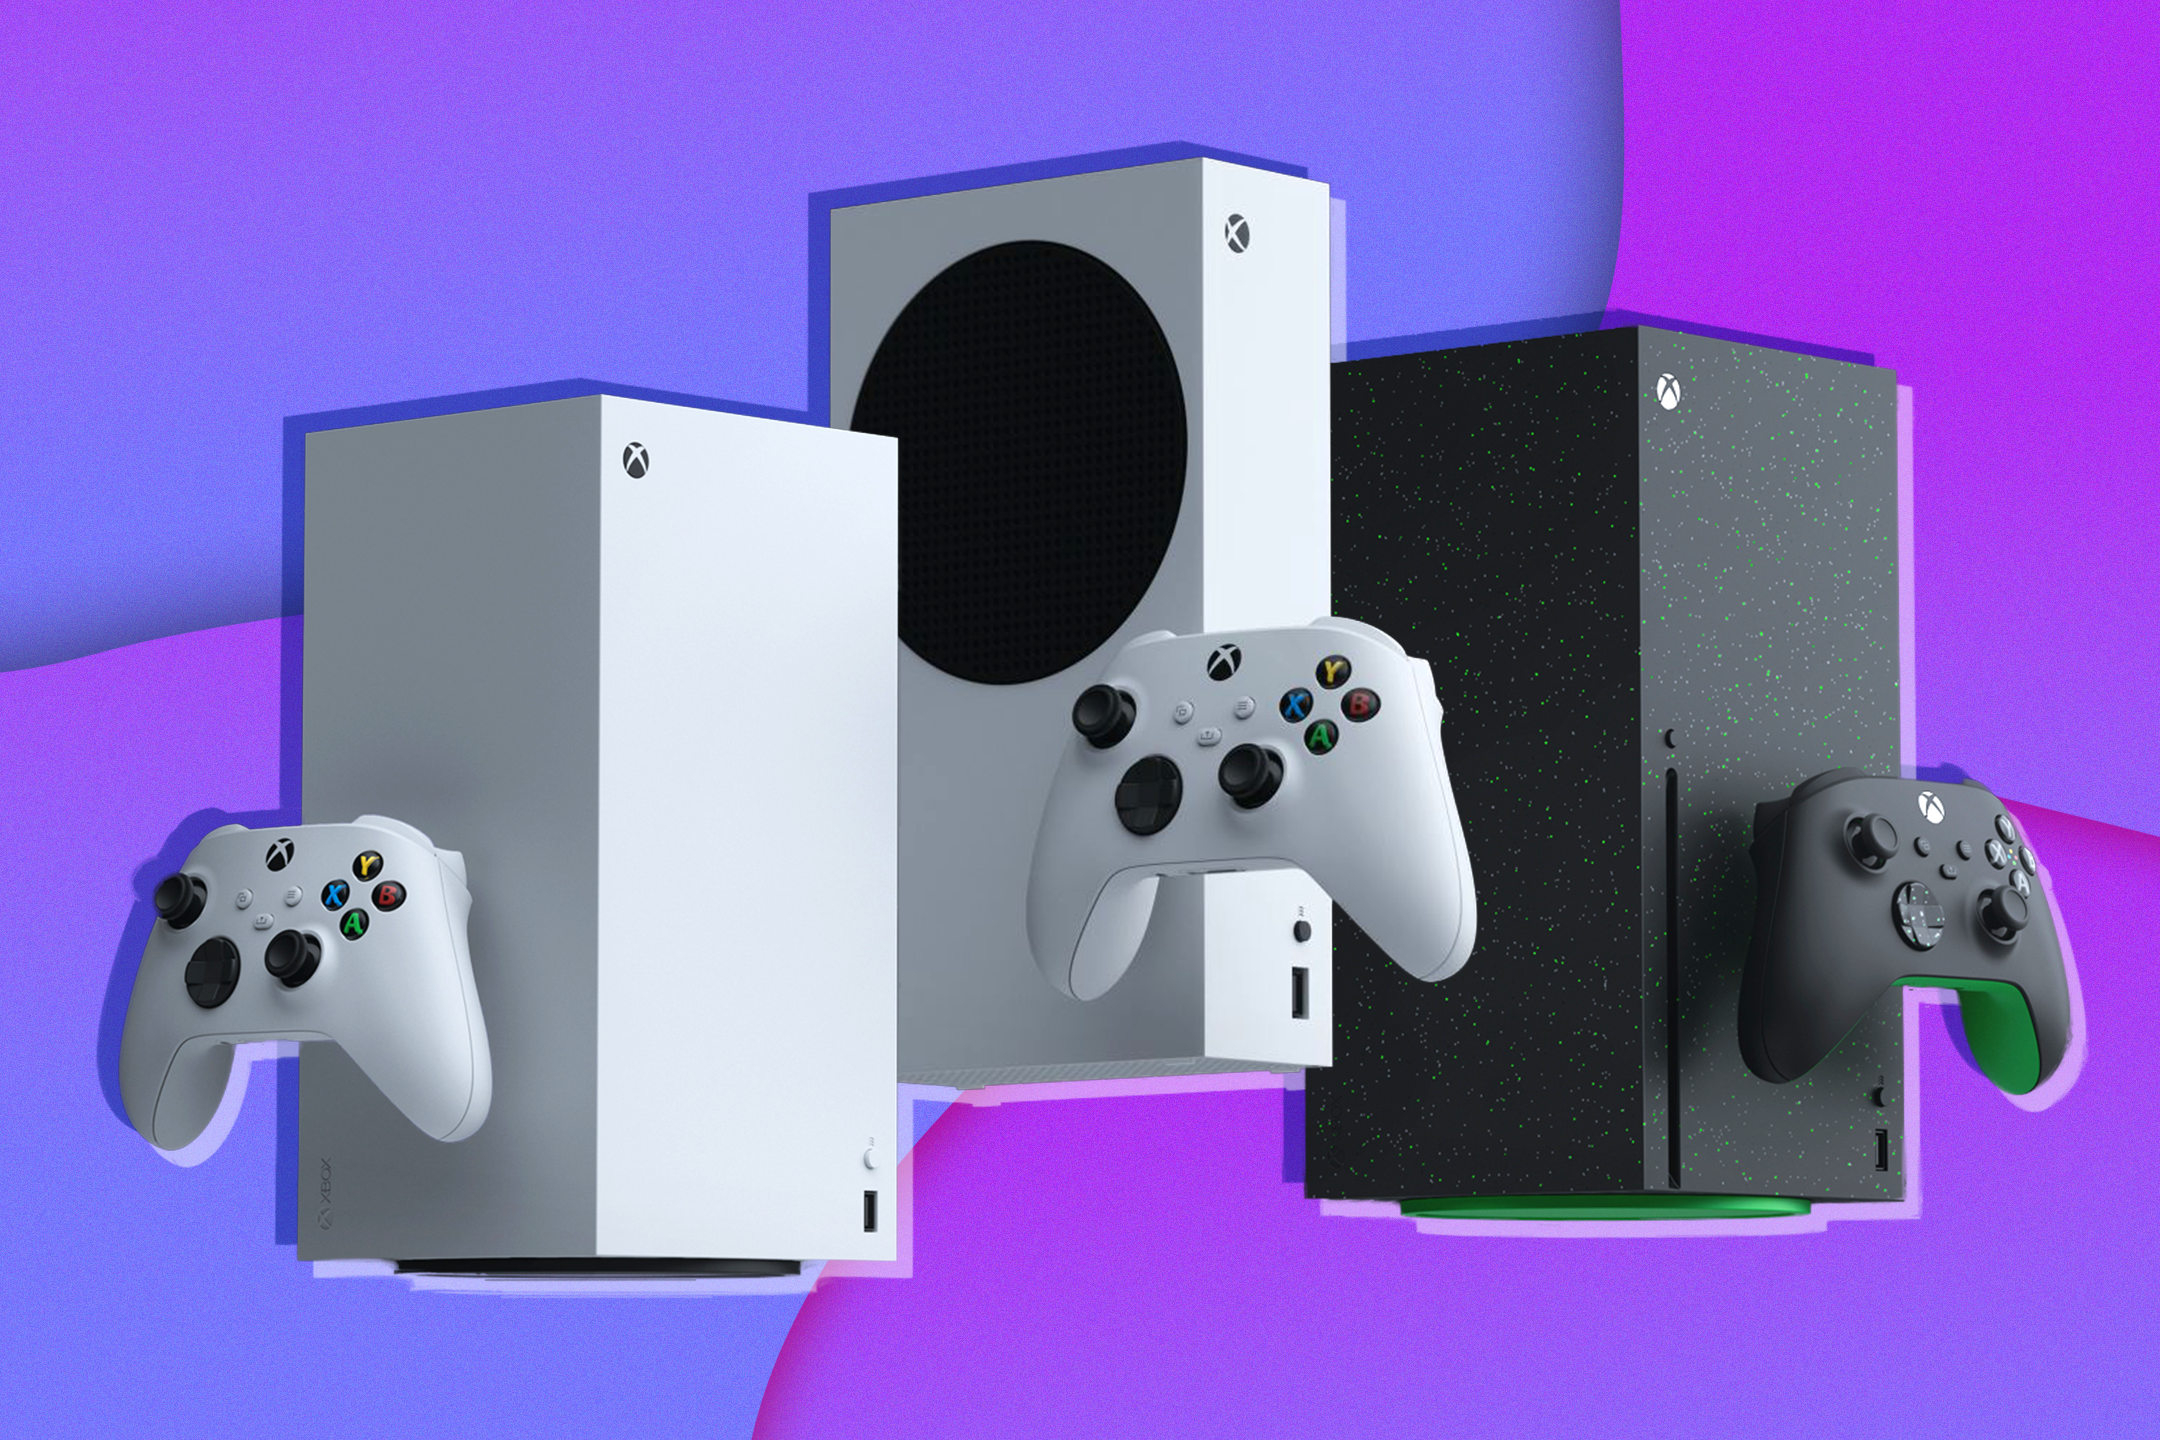 Three new consoles announced: the 2TB Xbox Series X in galaxy black, the all-digital 1TB Xbox Series X, and the 1TB Xbox Series S in white